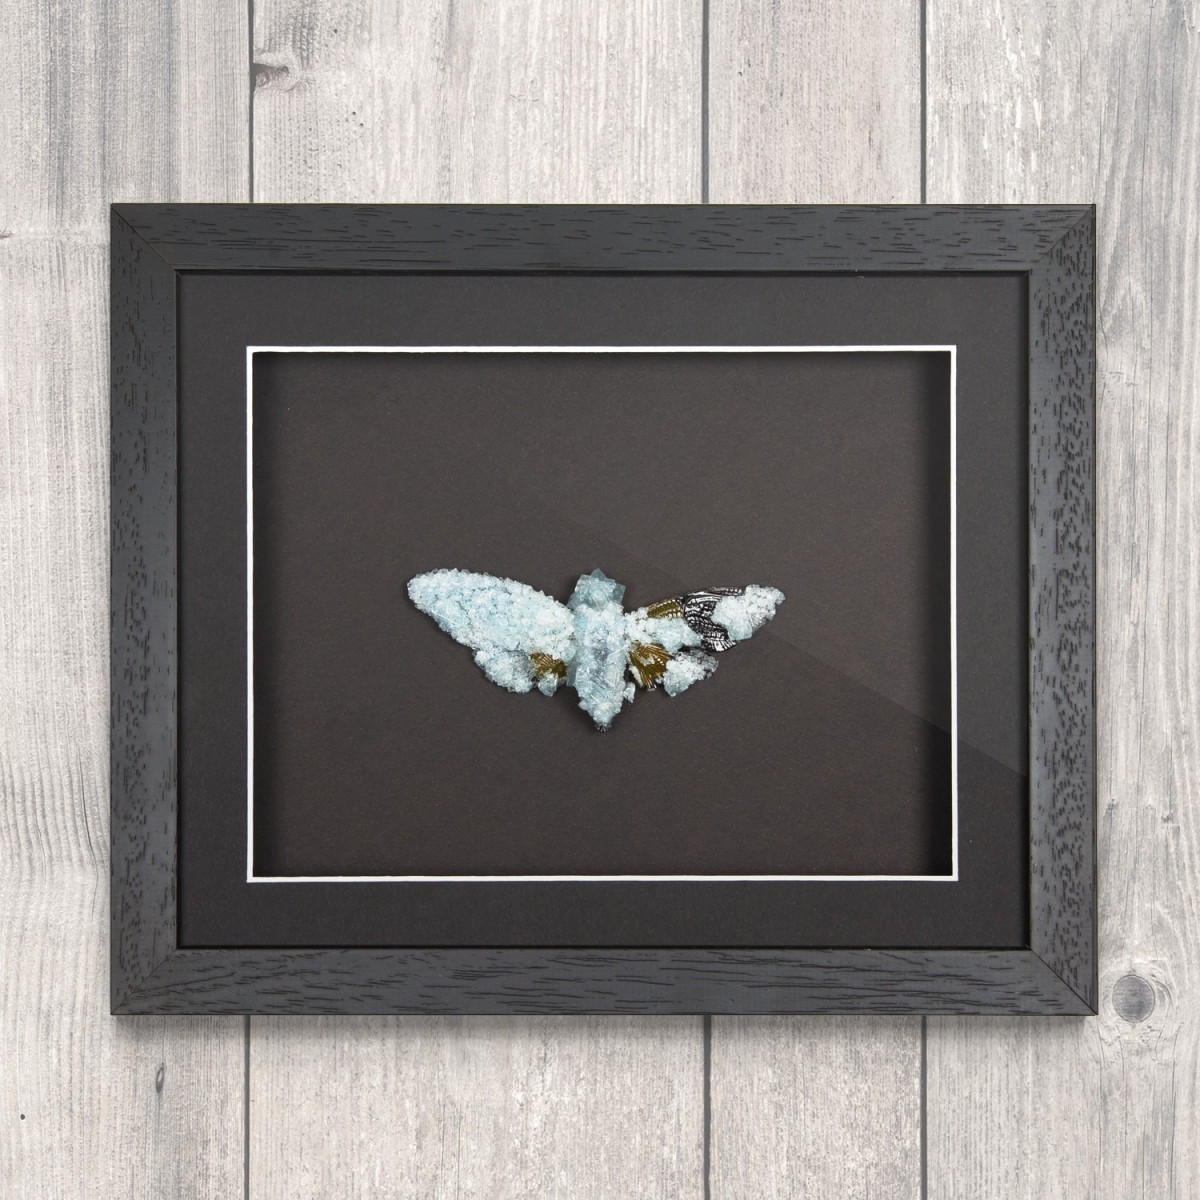 Minibeast Green Cicada (Trengganua sibylla) with Light Blue Crystals in Box Frame